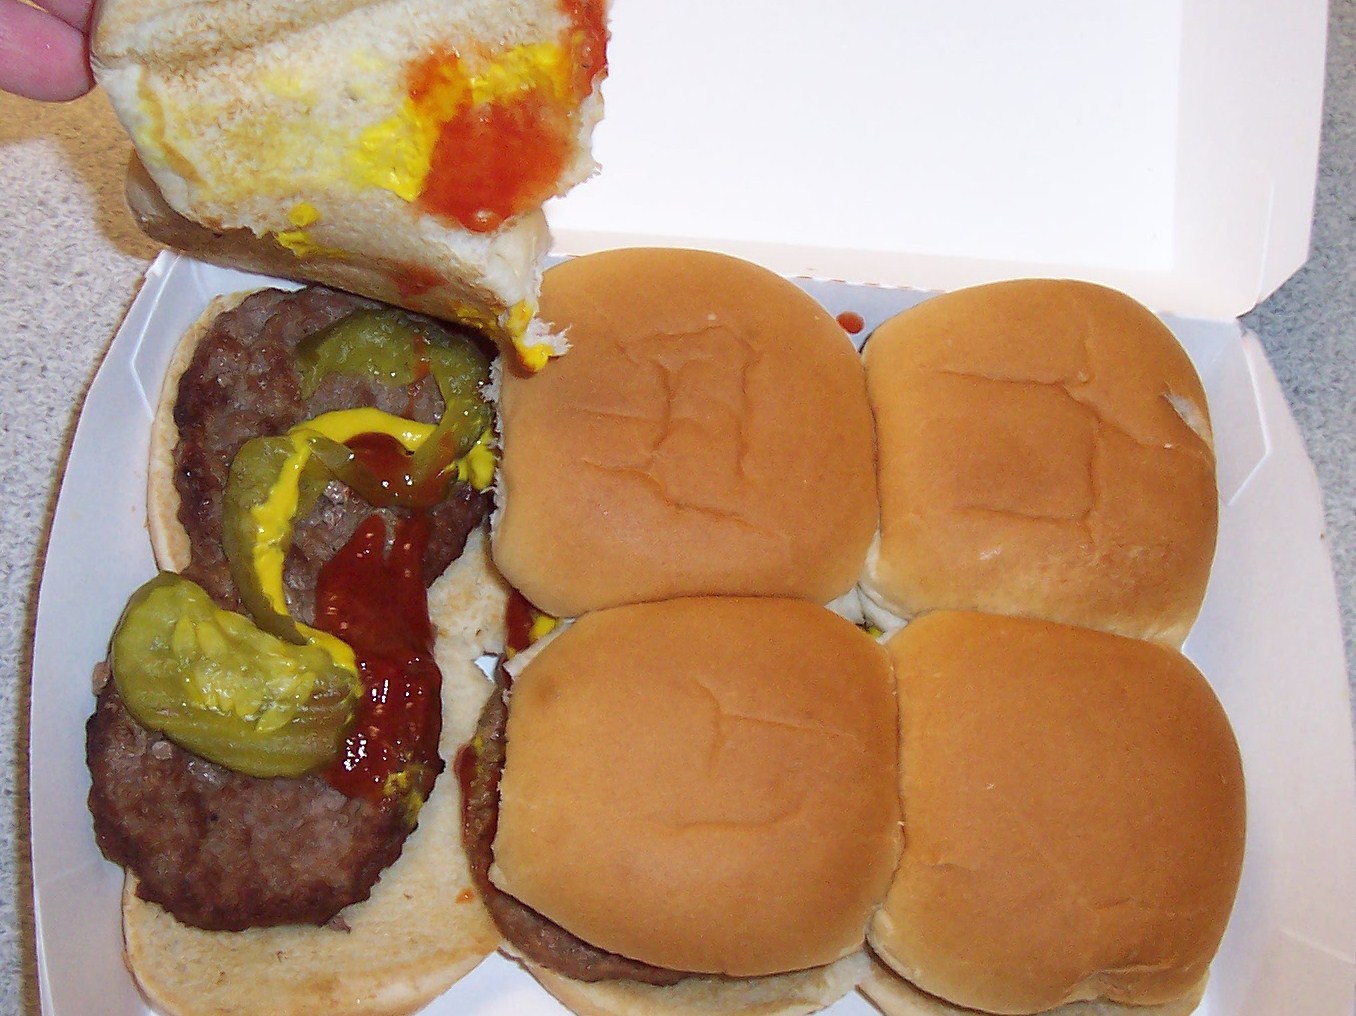 FAST FOOD NEWS: Burger King Pulled Pork King - The Impulsive Buy